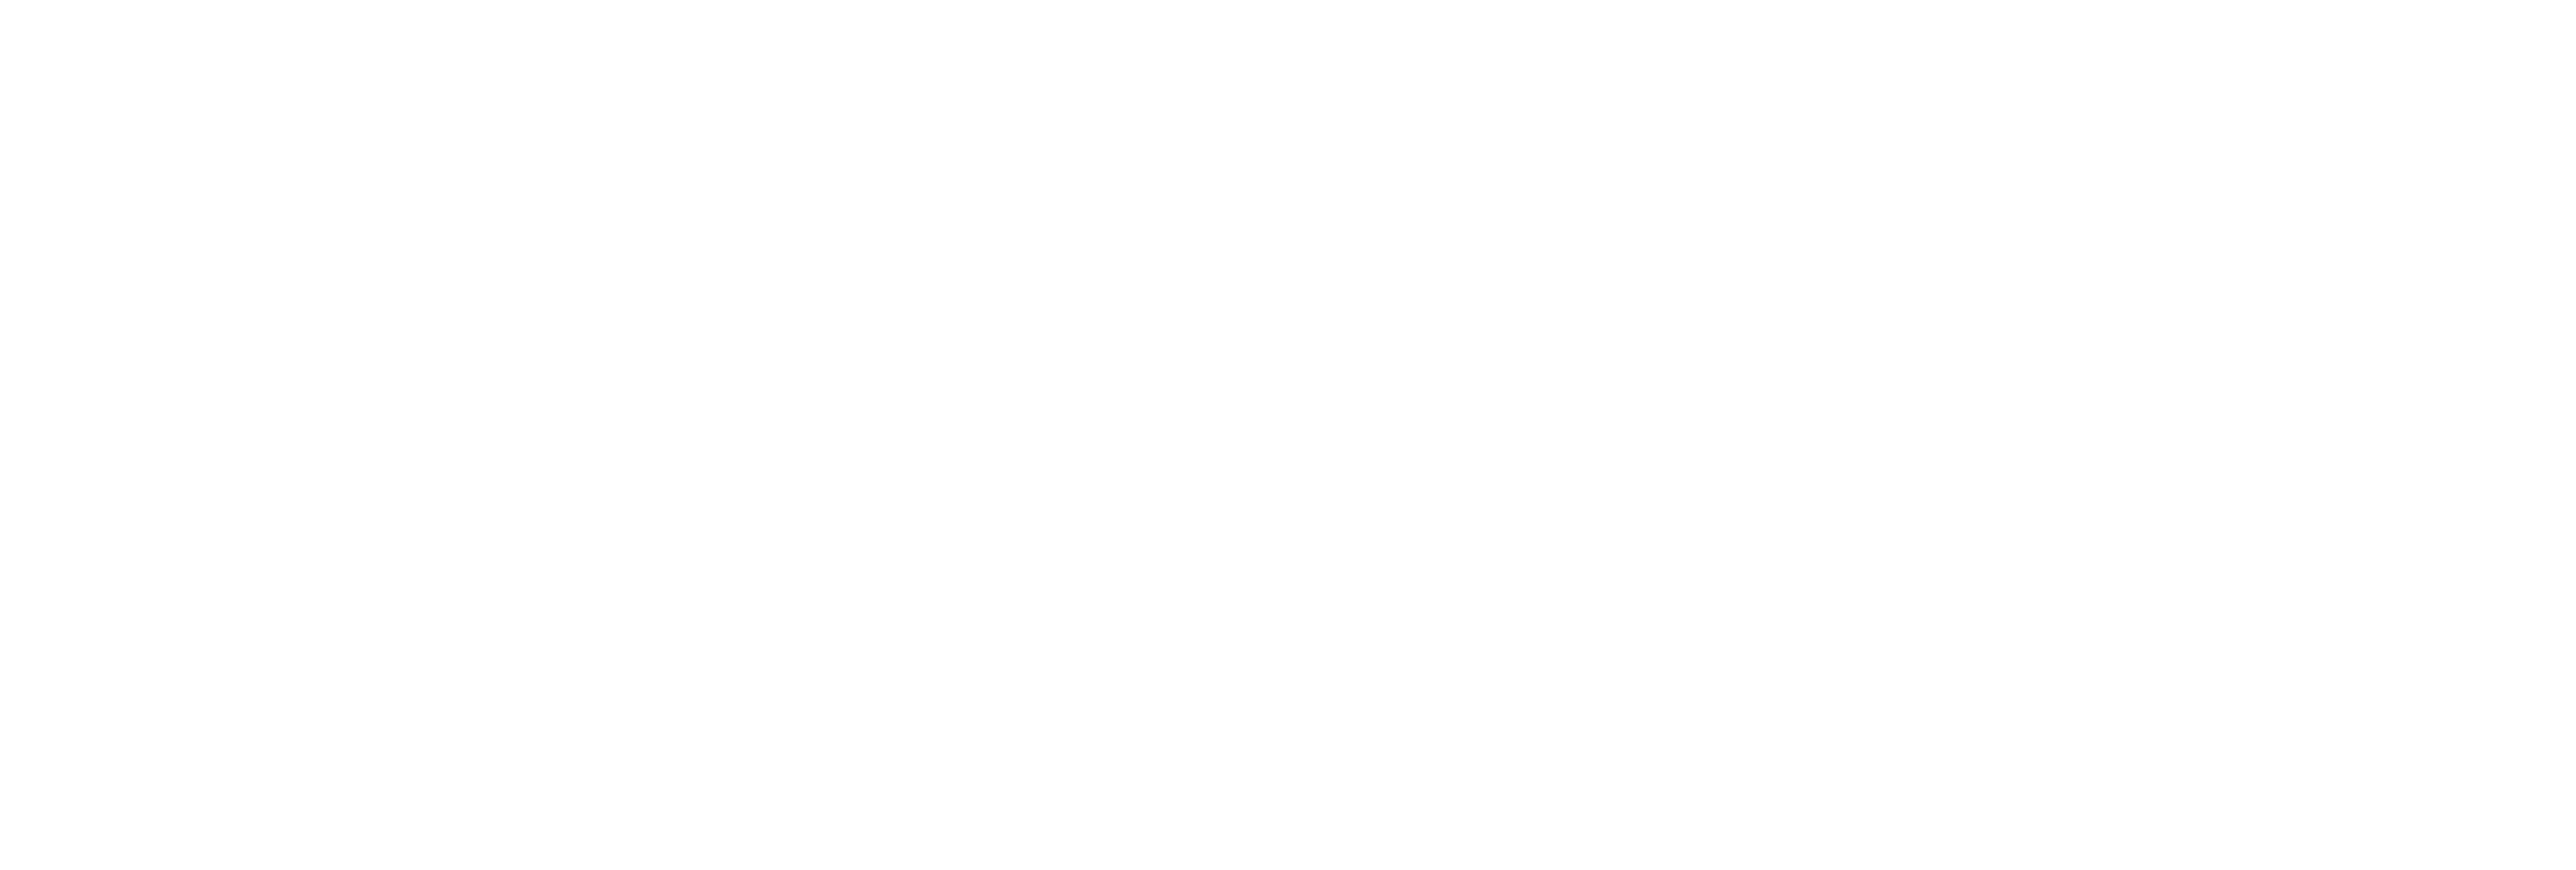 AniCura Torelló Clínica Veterinària logo